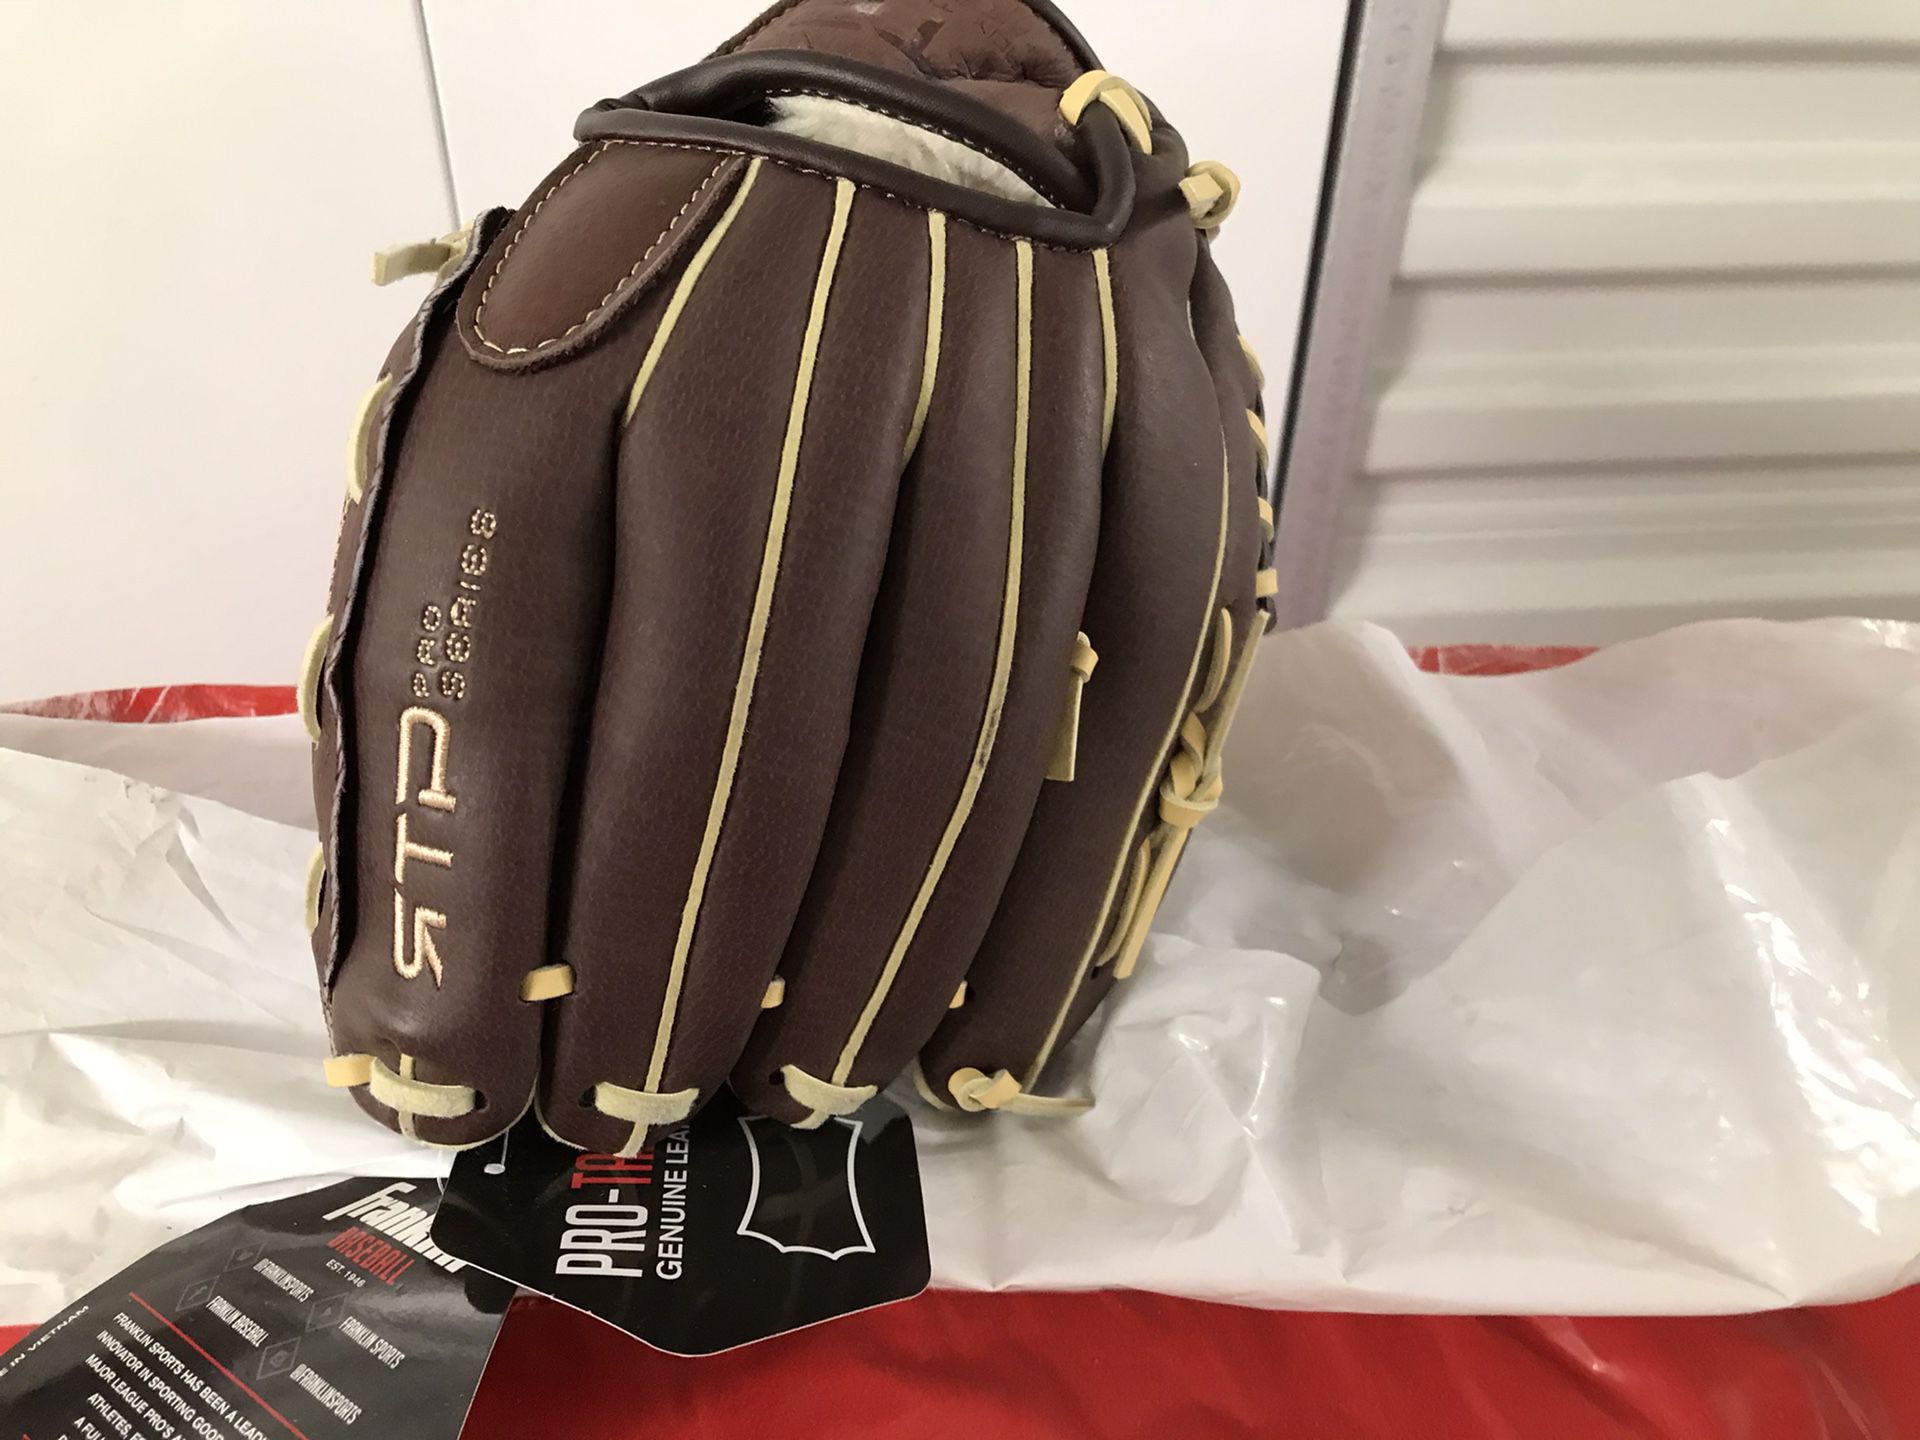 NEW child’s baseball glove